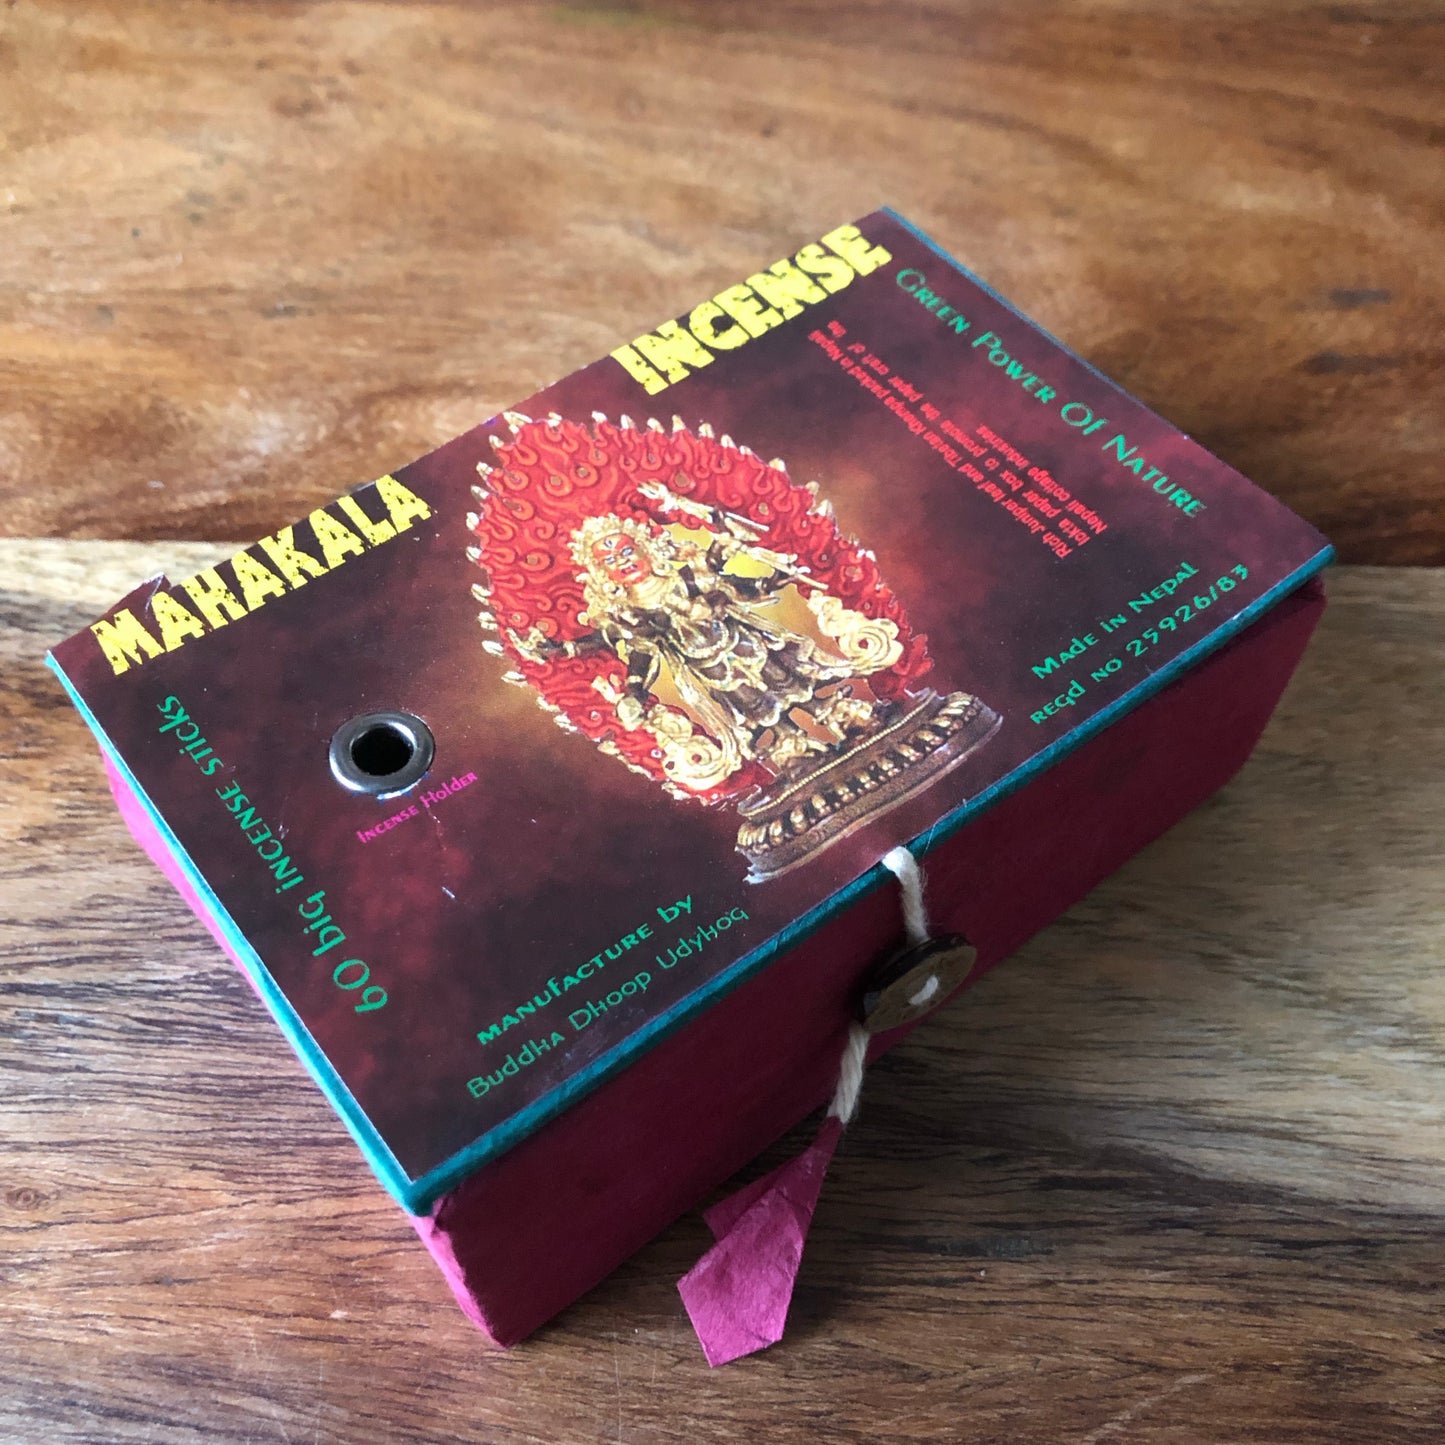 Mahakala incense